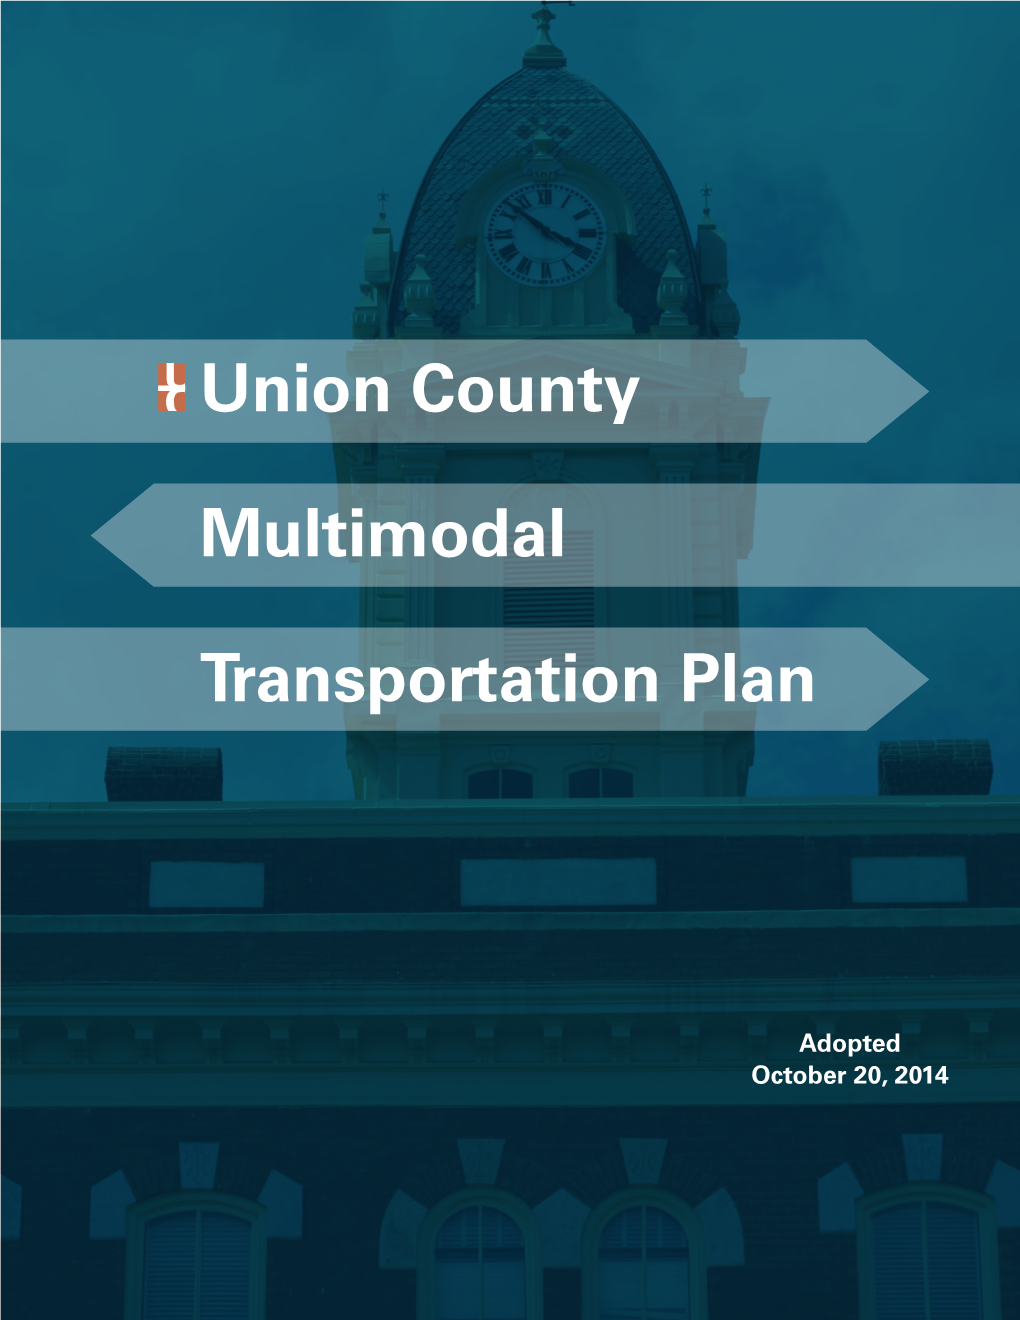 Union County Multimodal Transportation Plan 2014